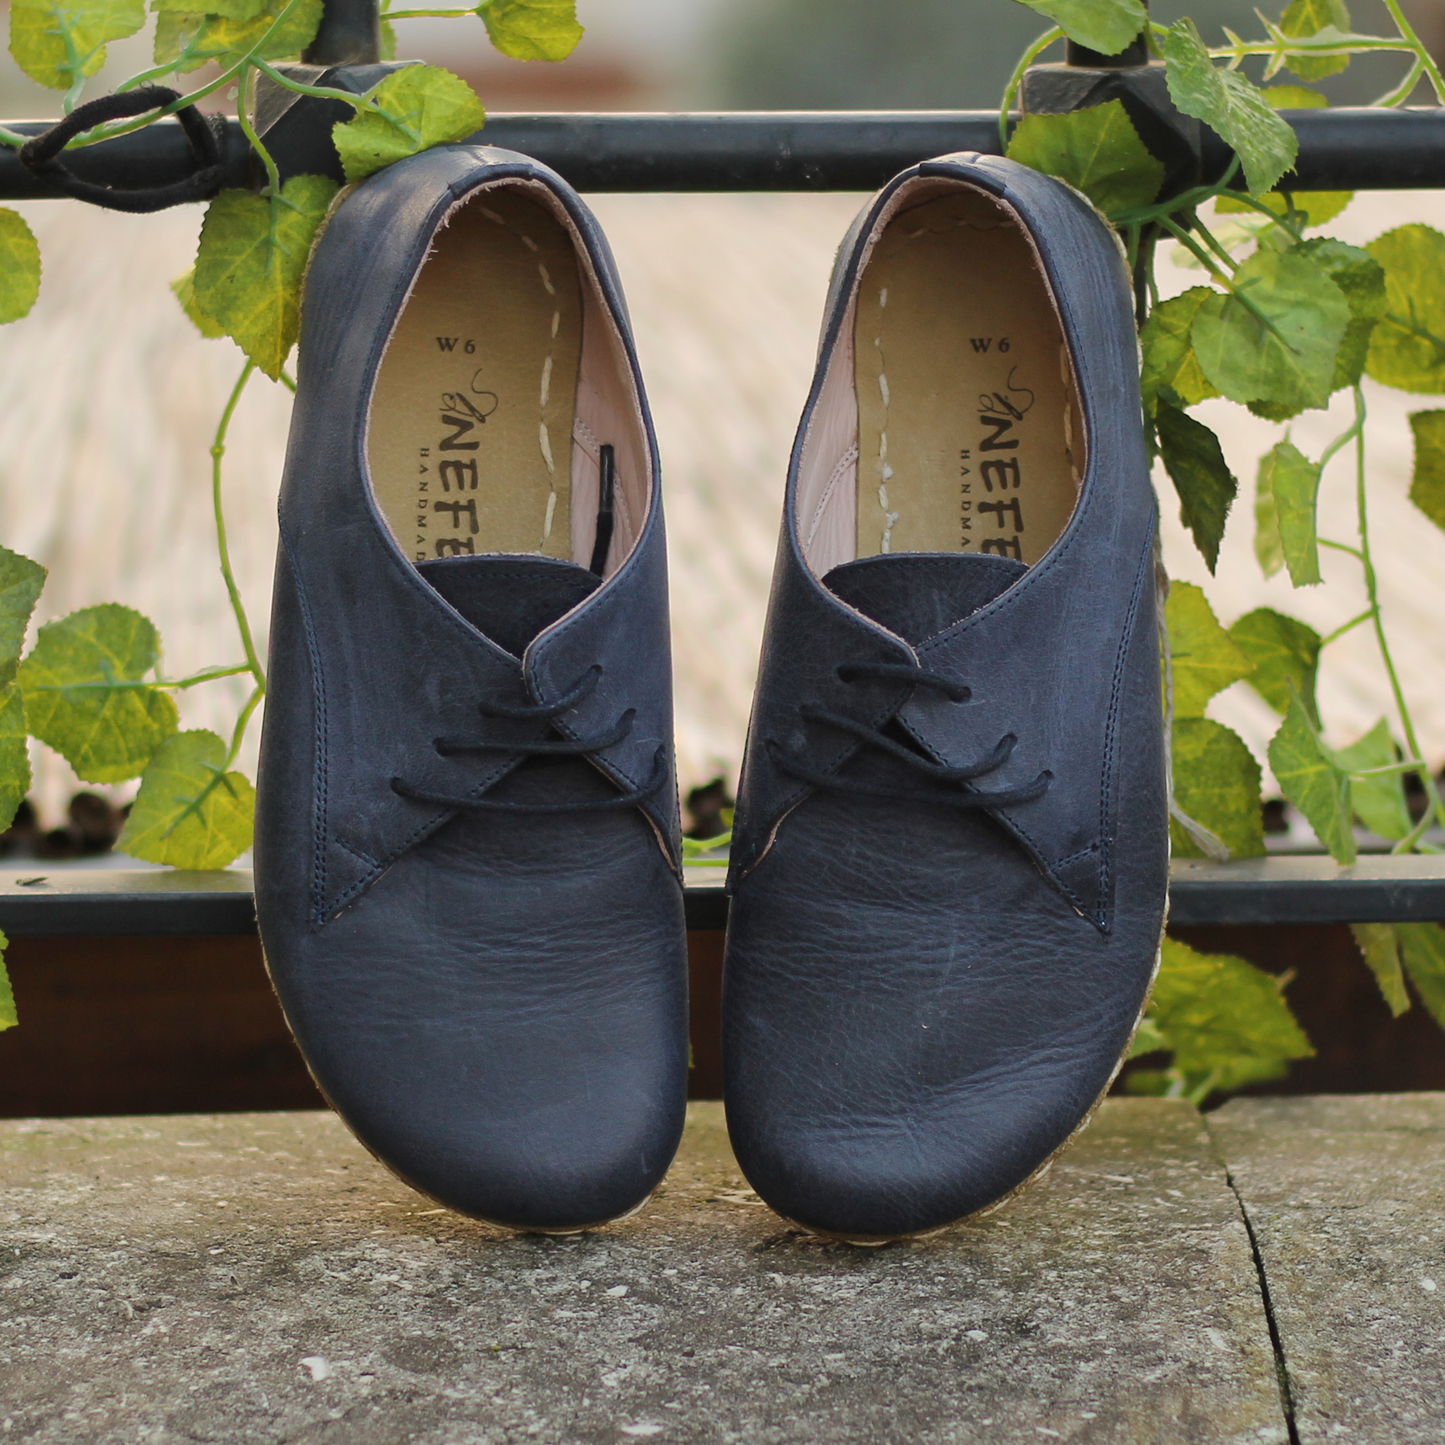 Men's Laced Barefoot Shoes - Navy Blue Leather Craftsmanship